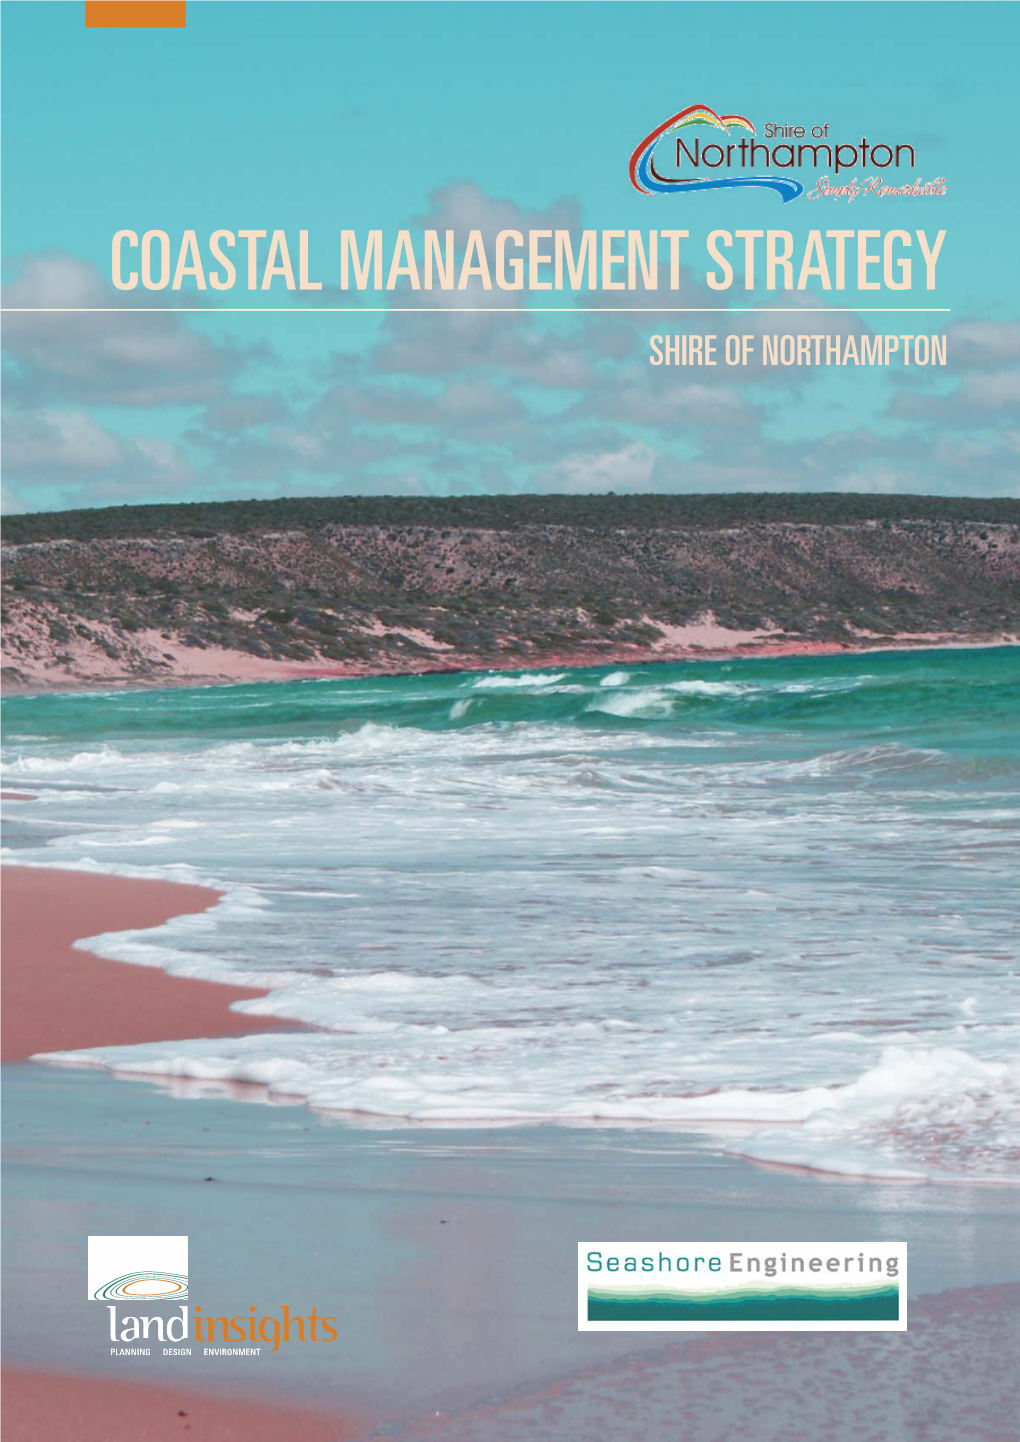 Shire of Northampton Coastal Management Strategy (2017)